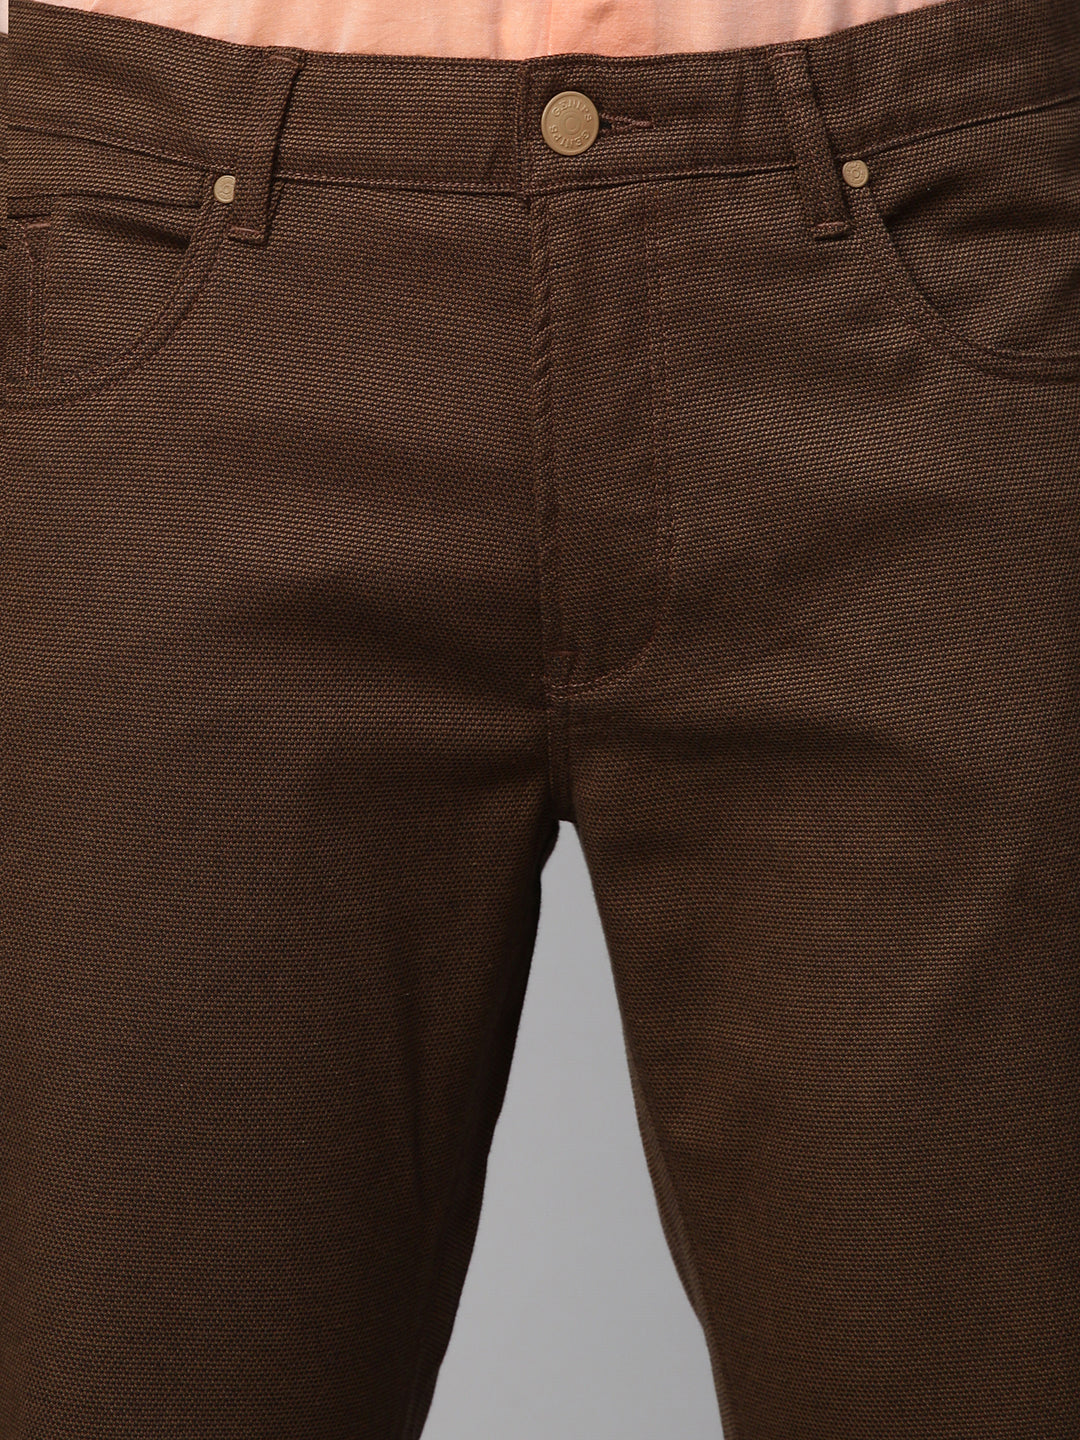 Genips Men's Coffee Cotton Stretch Rico Slim Fit Self Design 5 Pocket Trouser